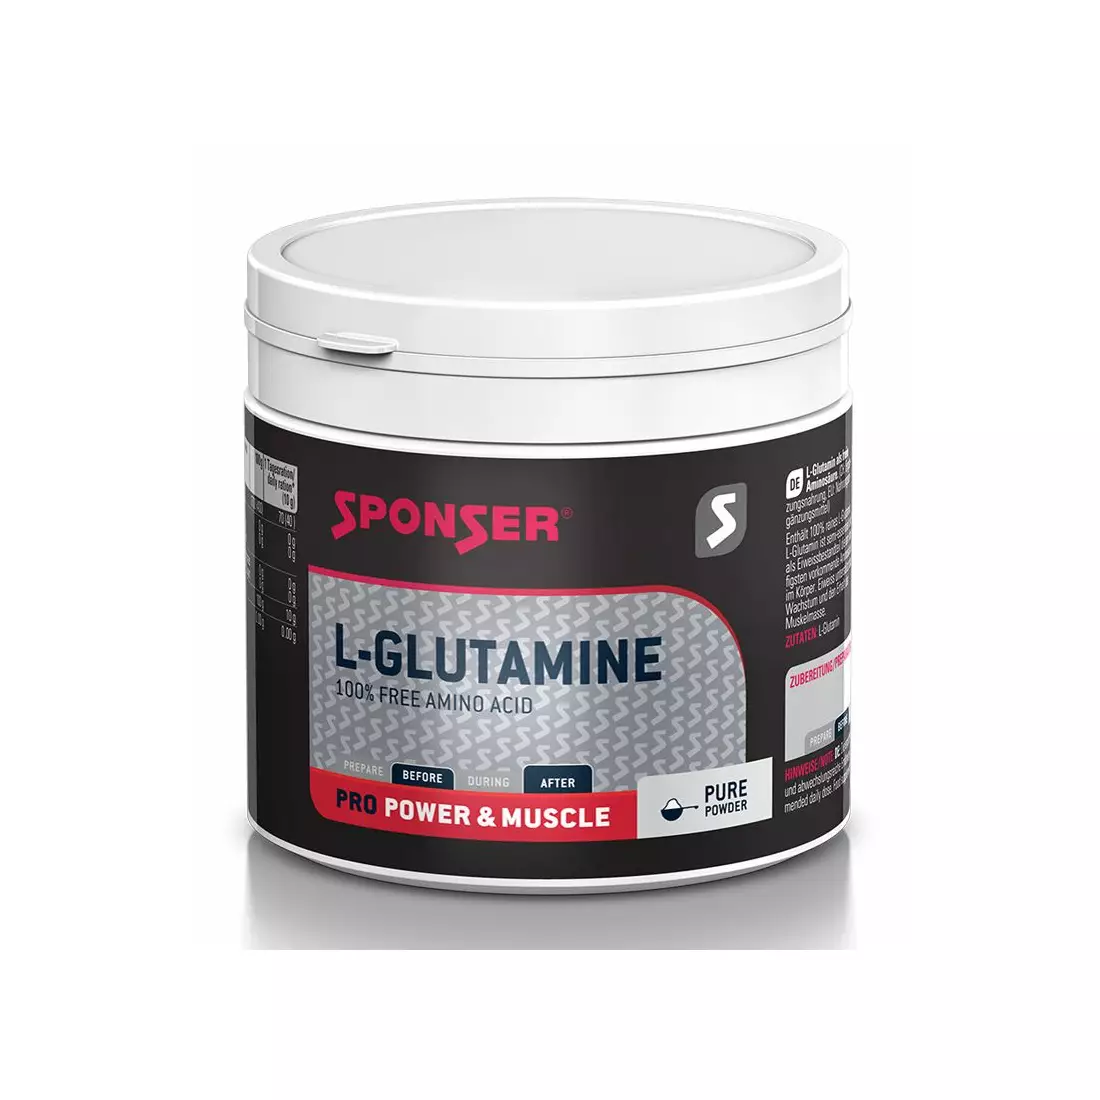 Tiszta glutamin SPONSER L-GLUTAMINE 100% PURE doboz 350g 